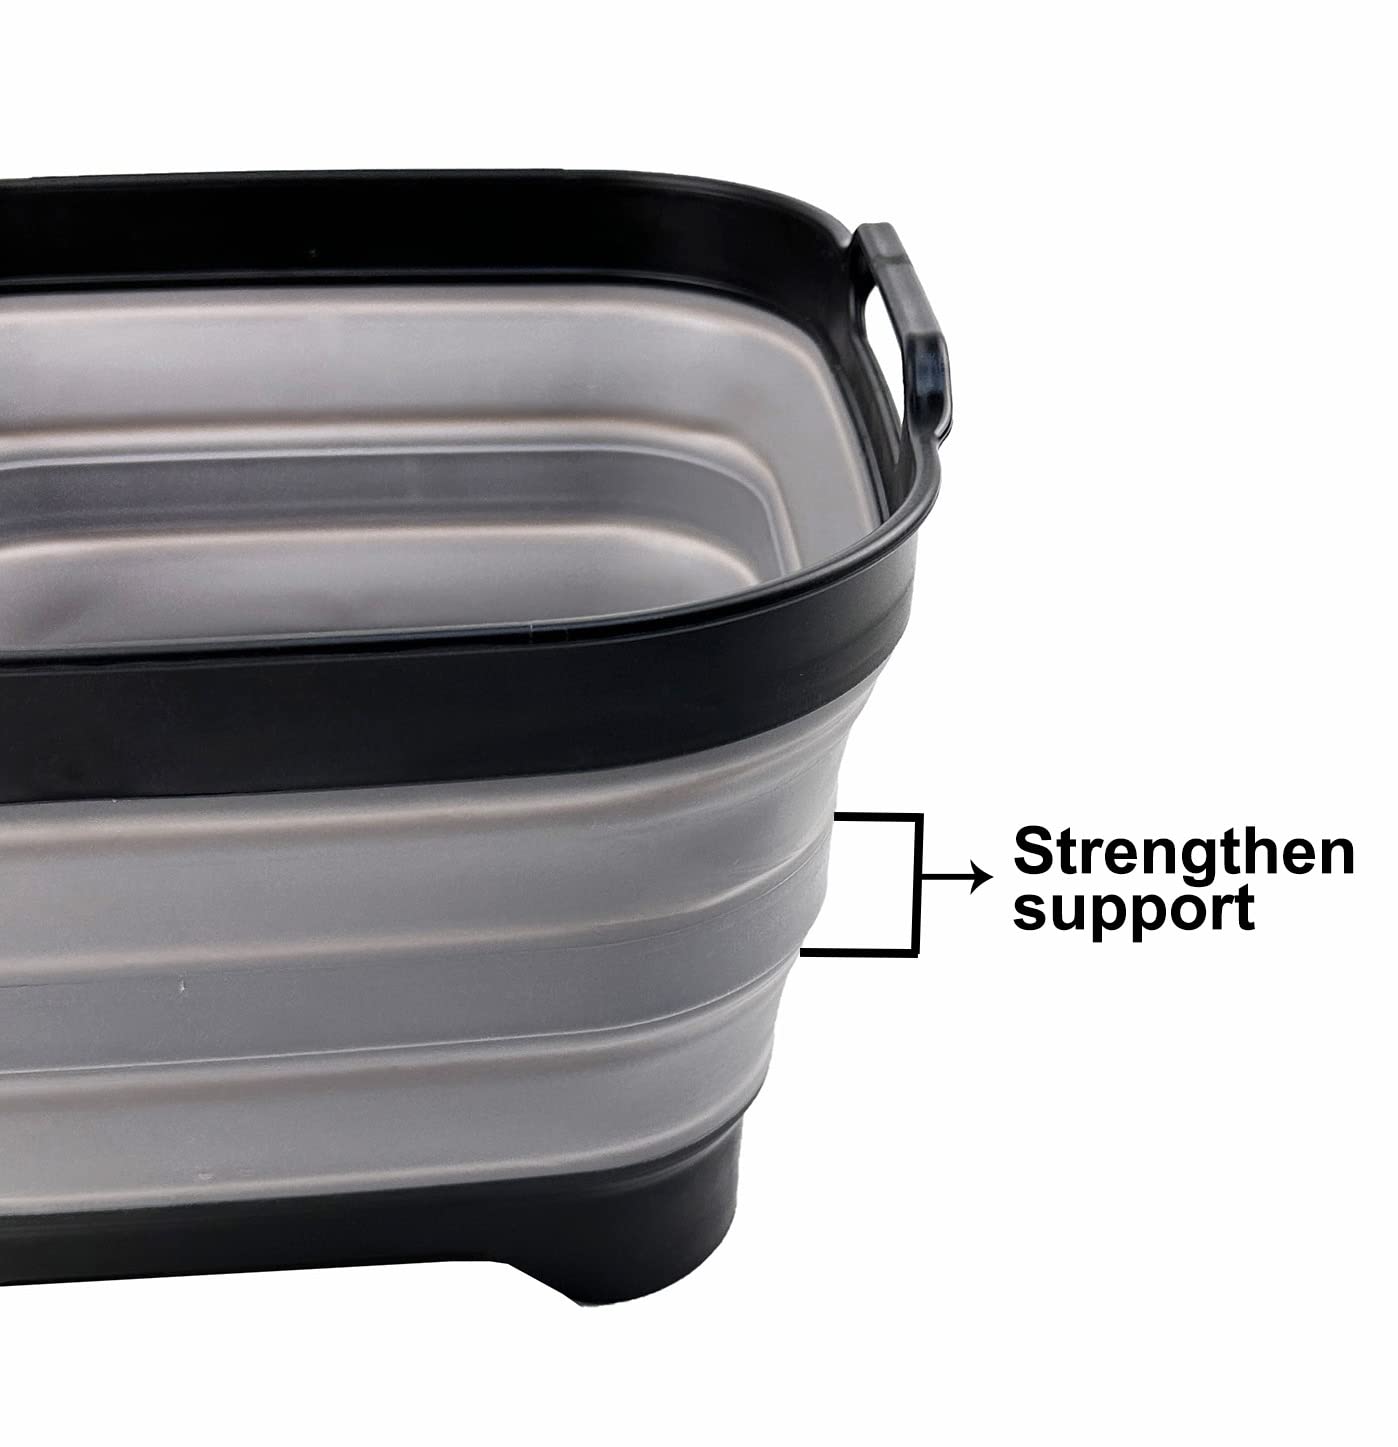 SAMMART 10L (2.64 Gallon) Collapsible Dishpan with Draining Plug - Foldable Washing Basin - Portable Dish Washing Tub - Space Saving Kitchen Storage Tray (Black/Alloy Grey)